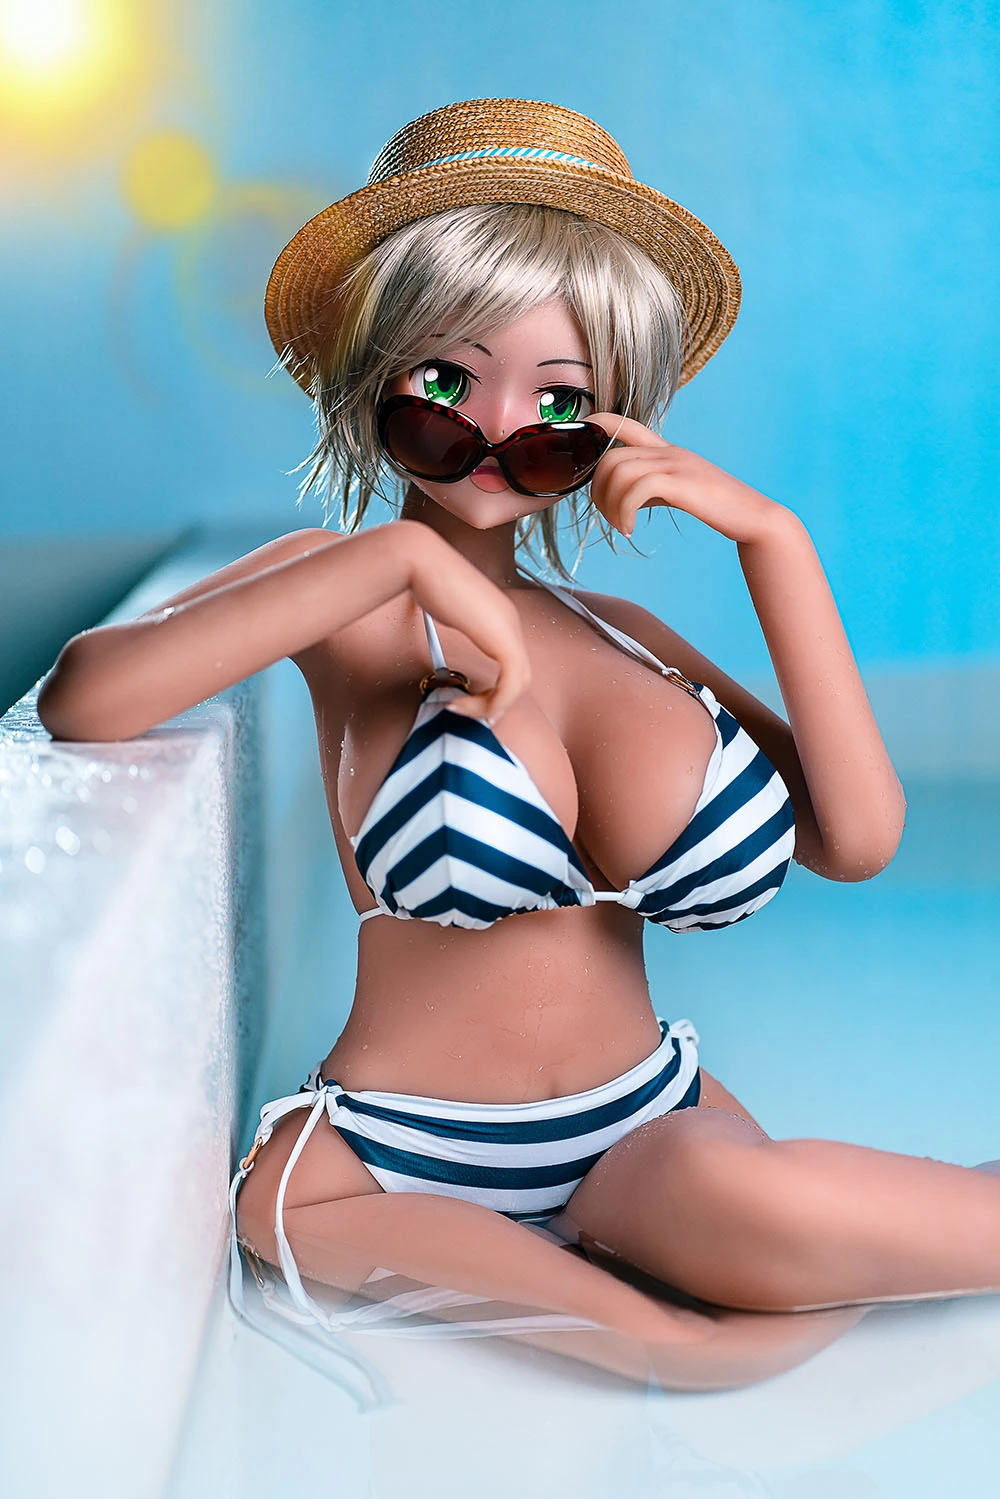  siliko nude realistic chubby fuck doll